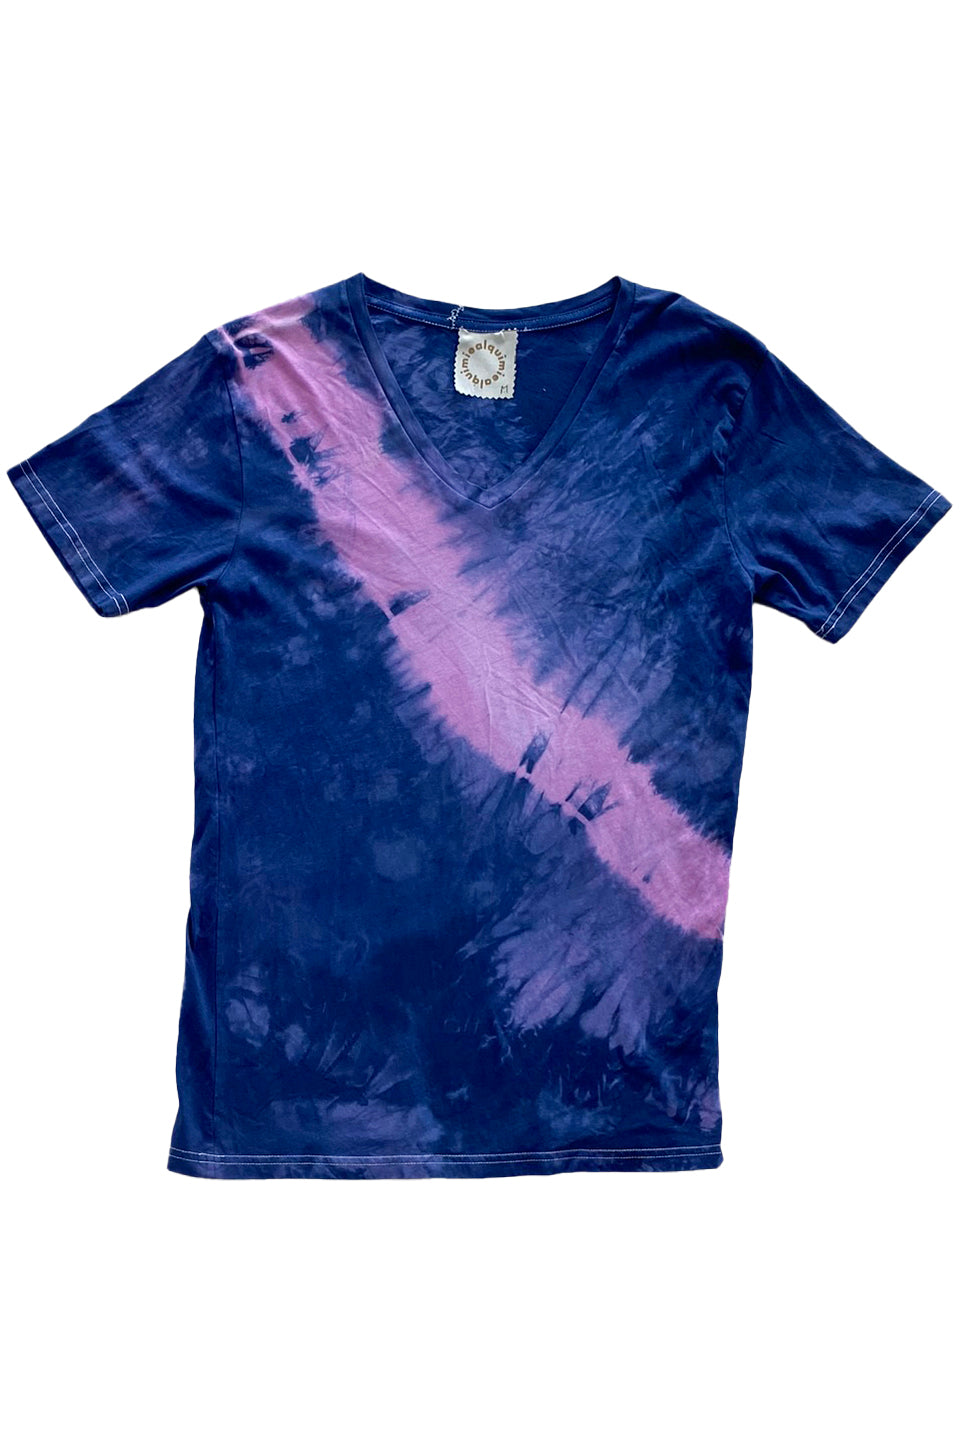 KB x Alquimie Studio Dyed T-Shirt - Blue Violet & Lilac Pink - Unisex Slim V-Neck M